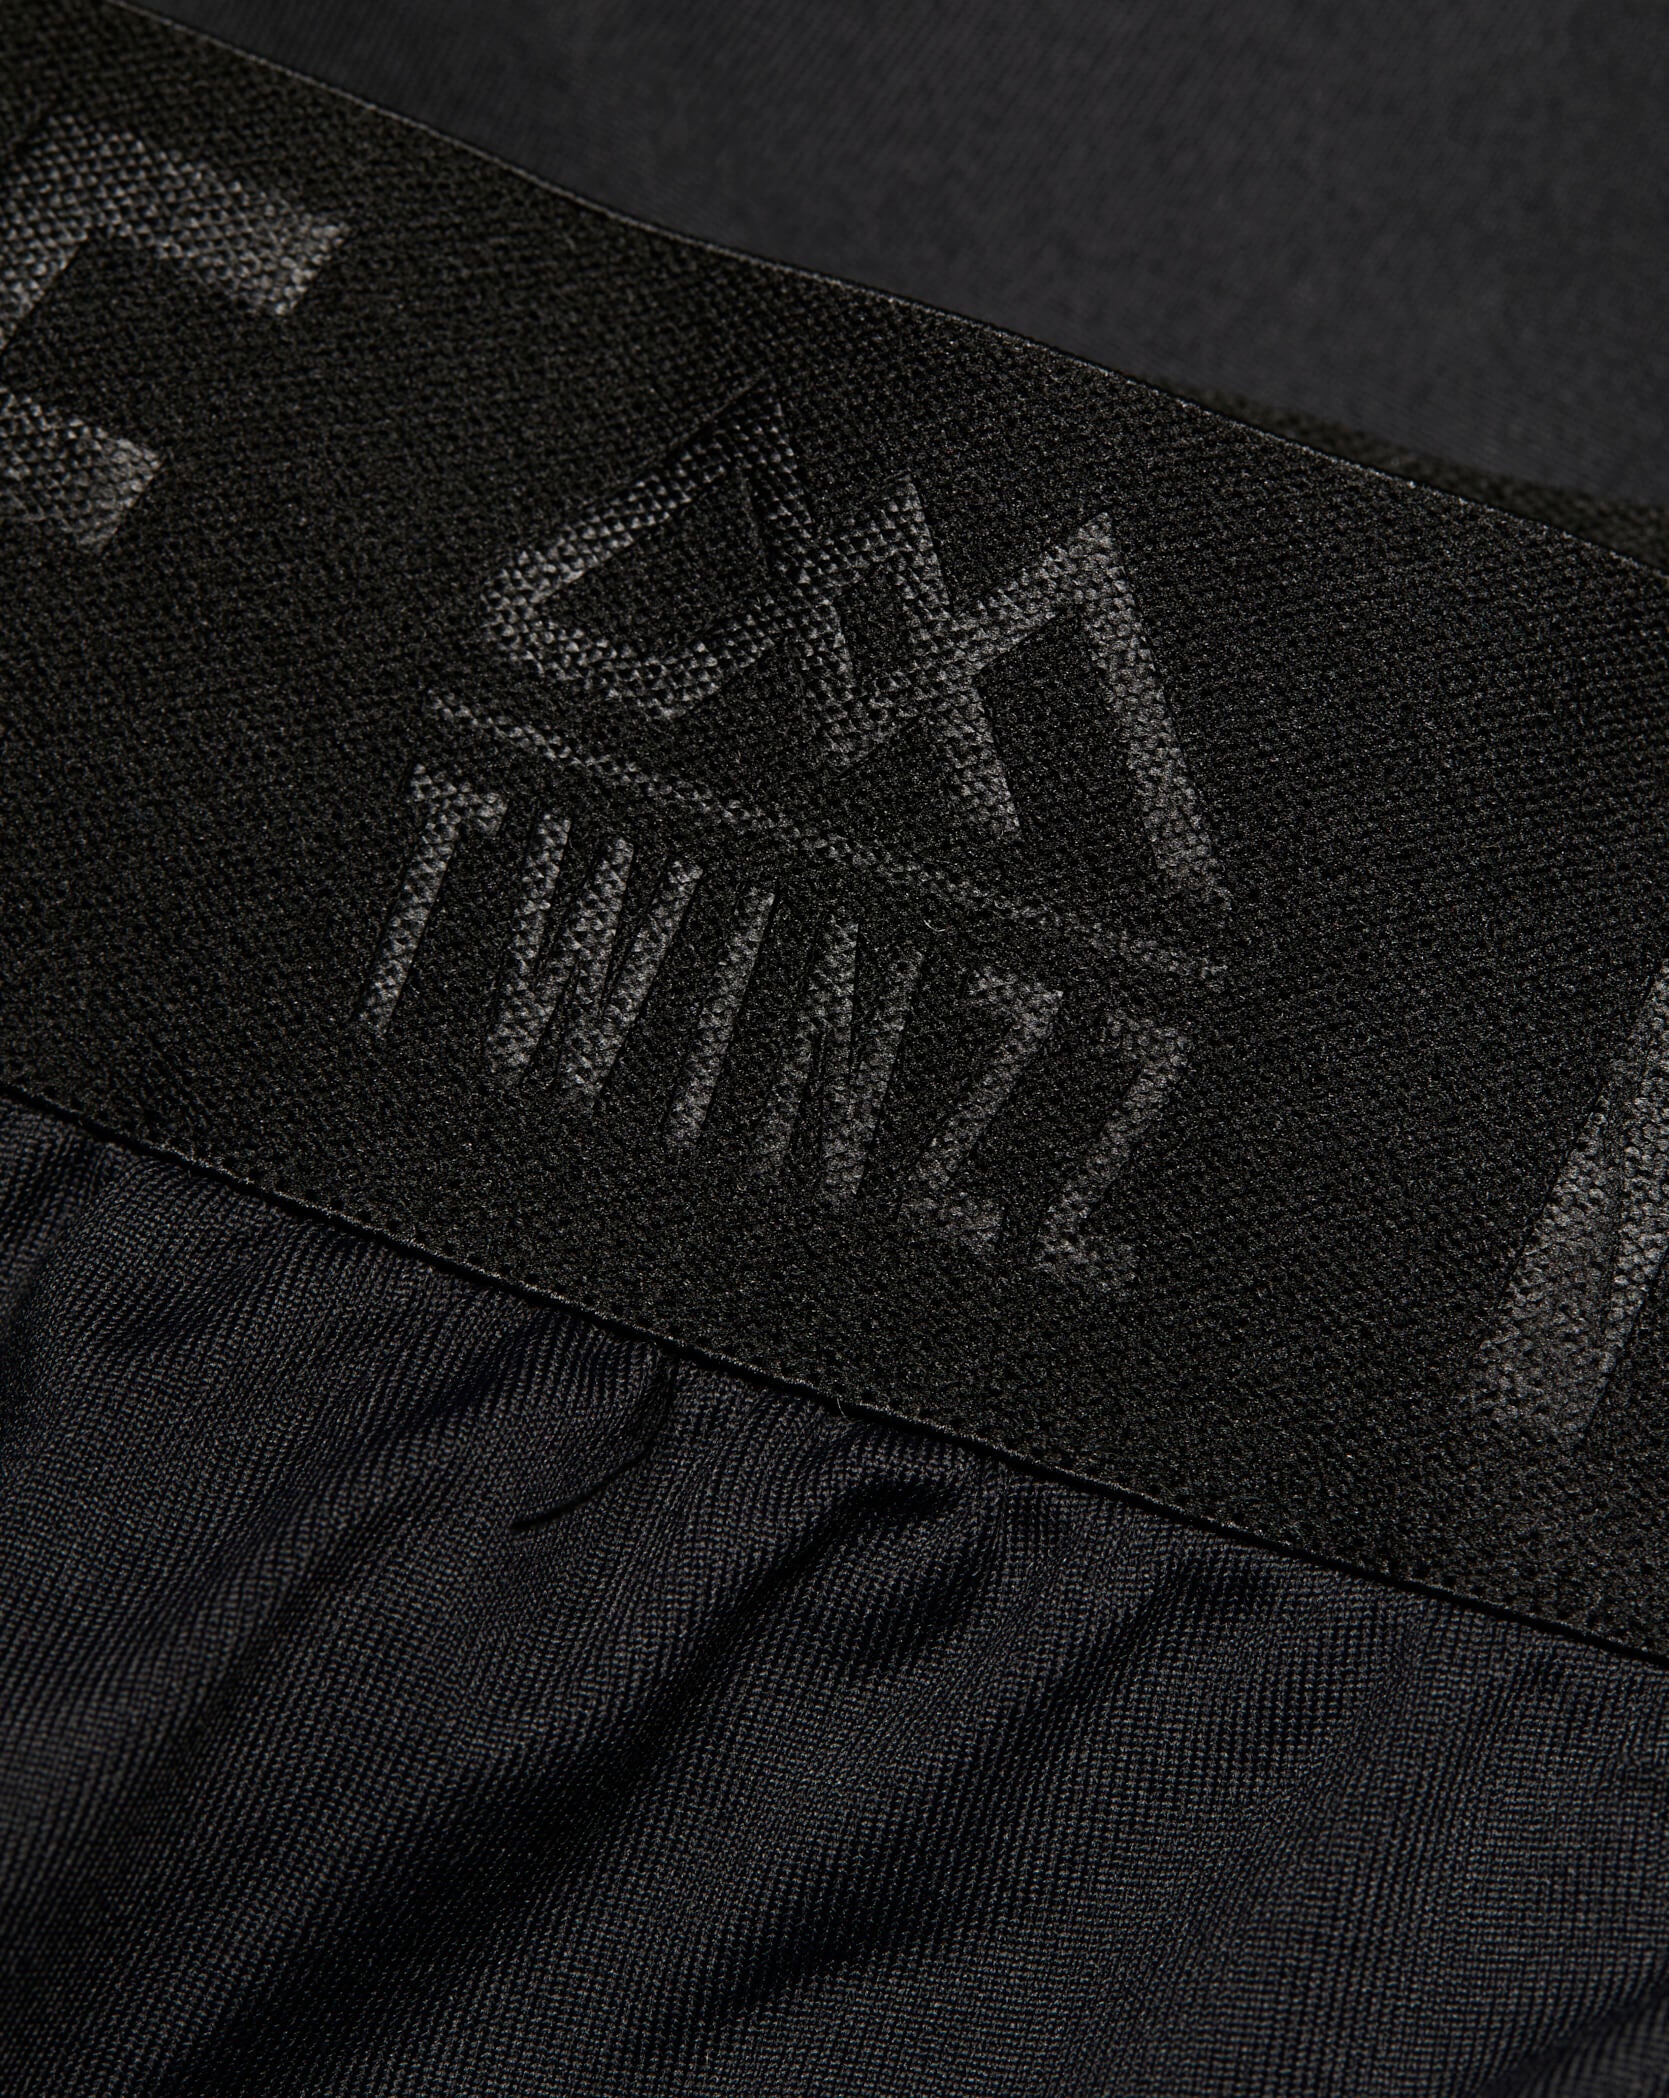 Black Twinzz hybrid pant